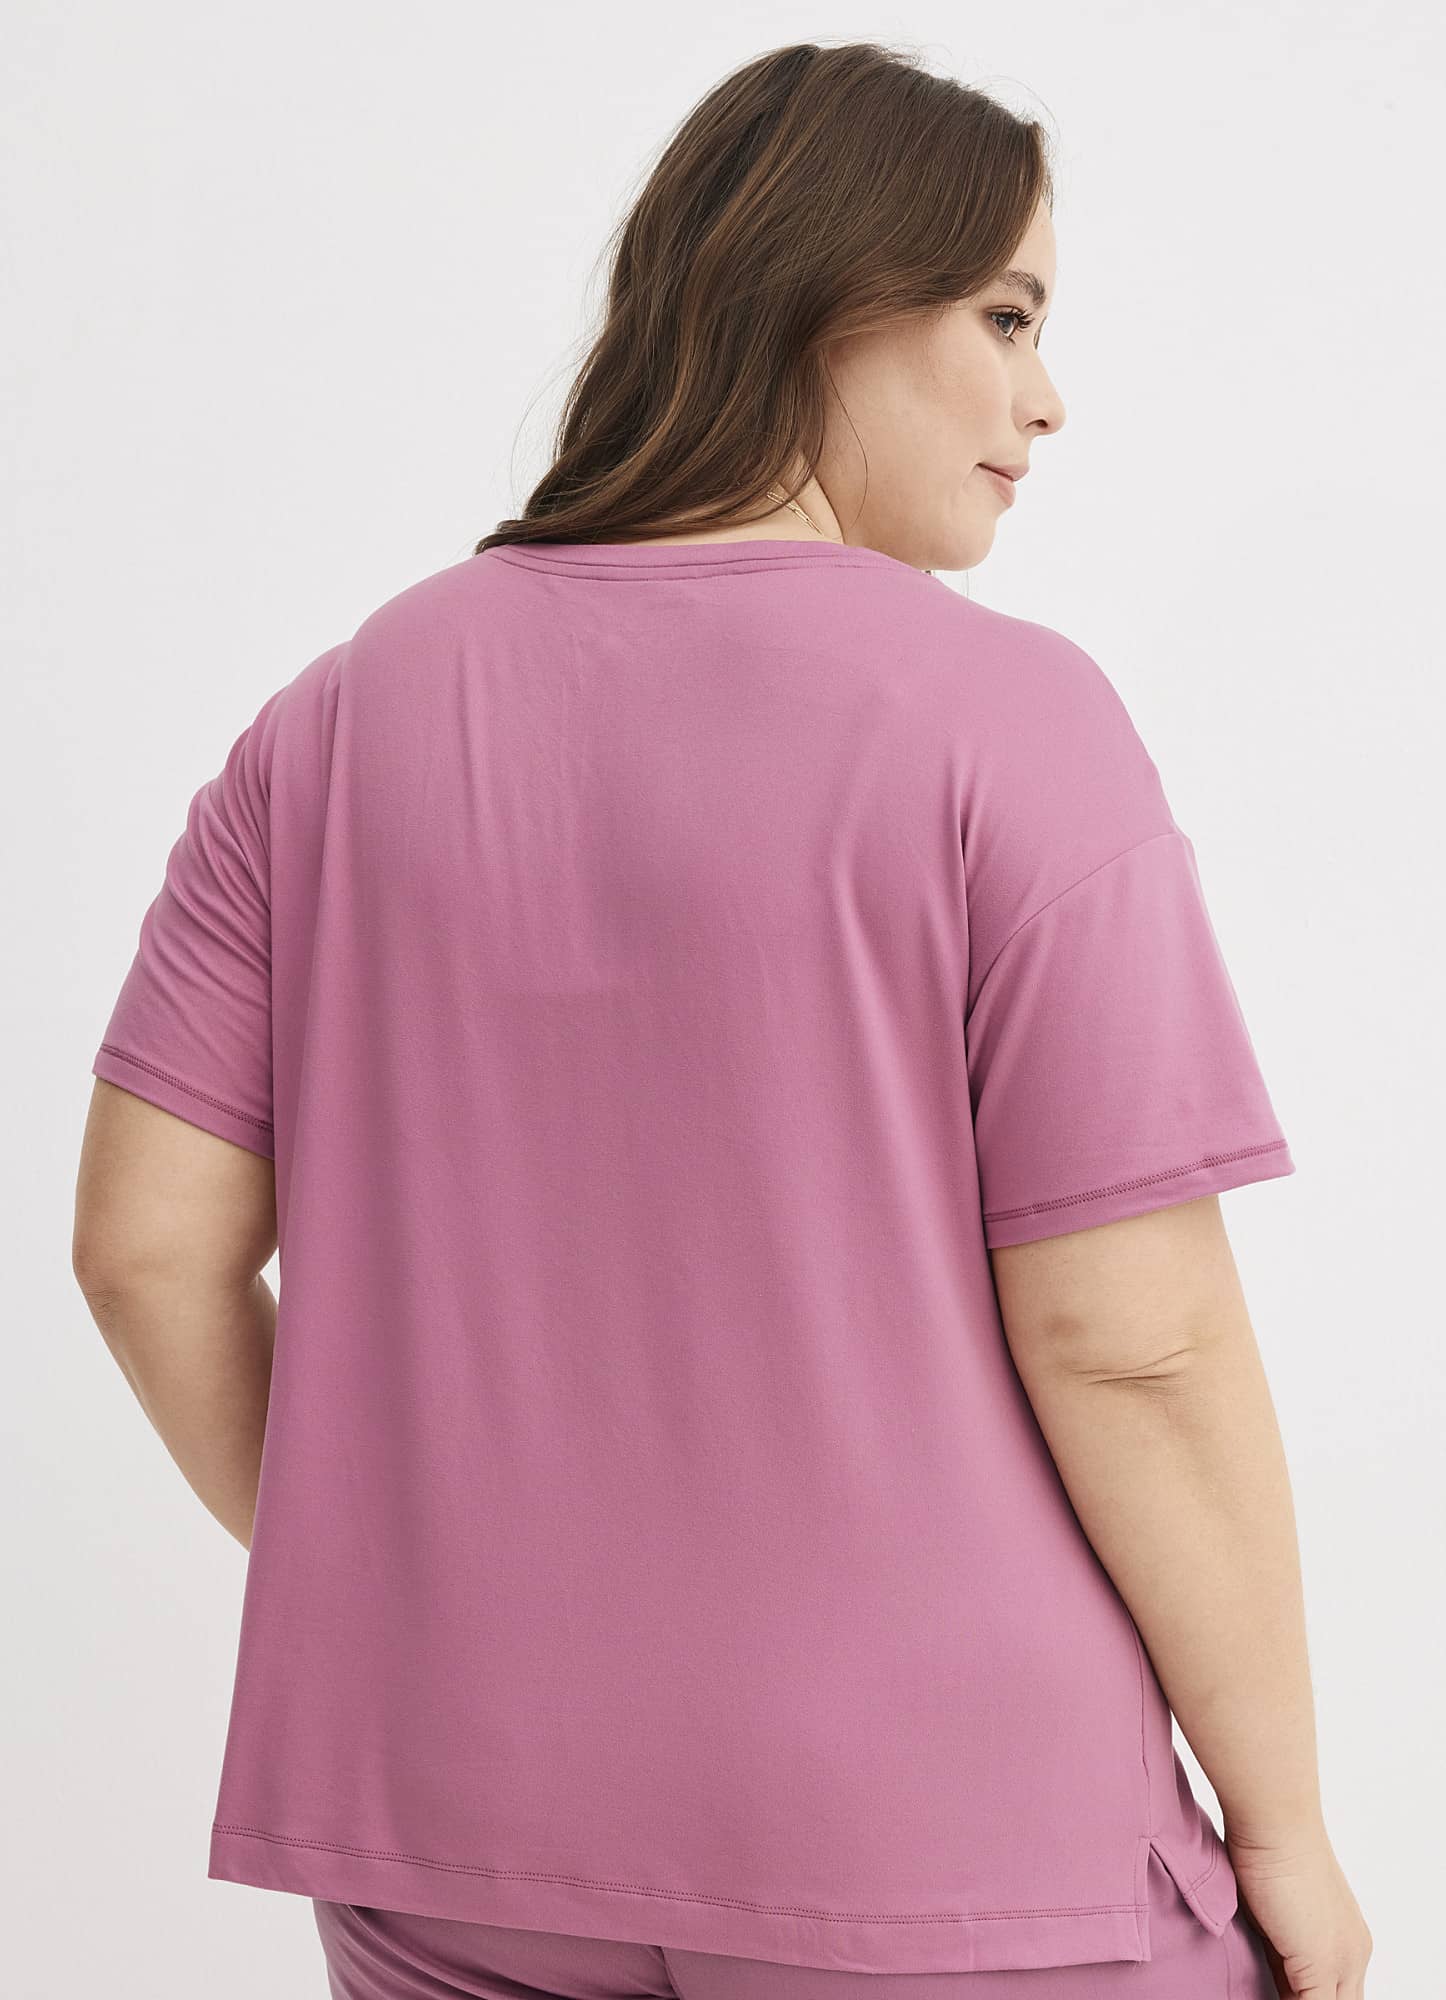 Jockey Women's Size Medium Beige Super-Soft Wireless Lined T-shirt